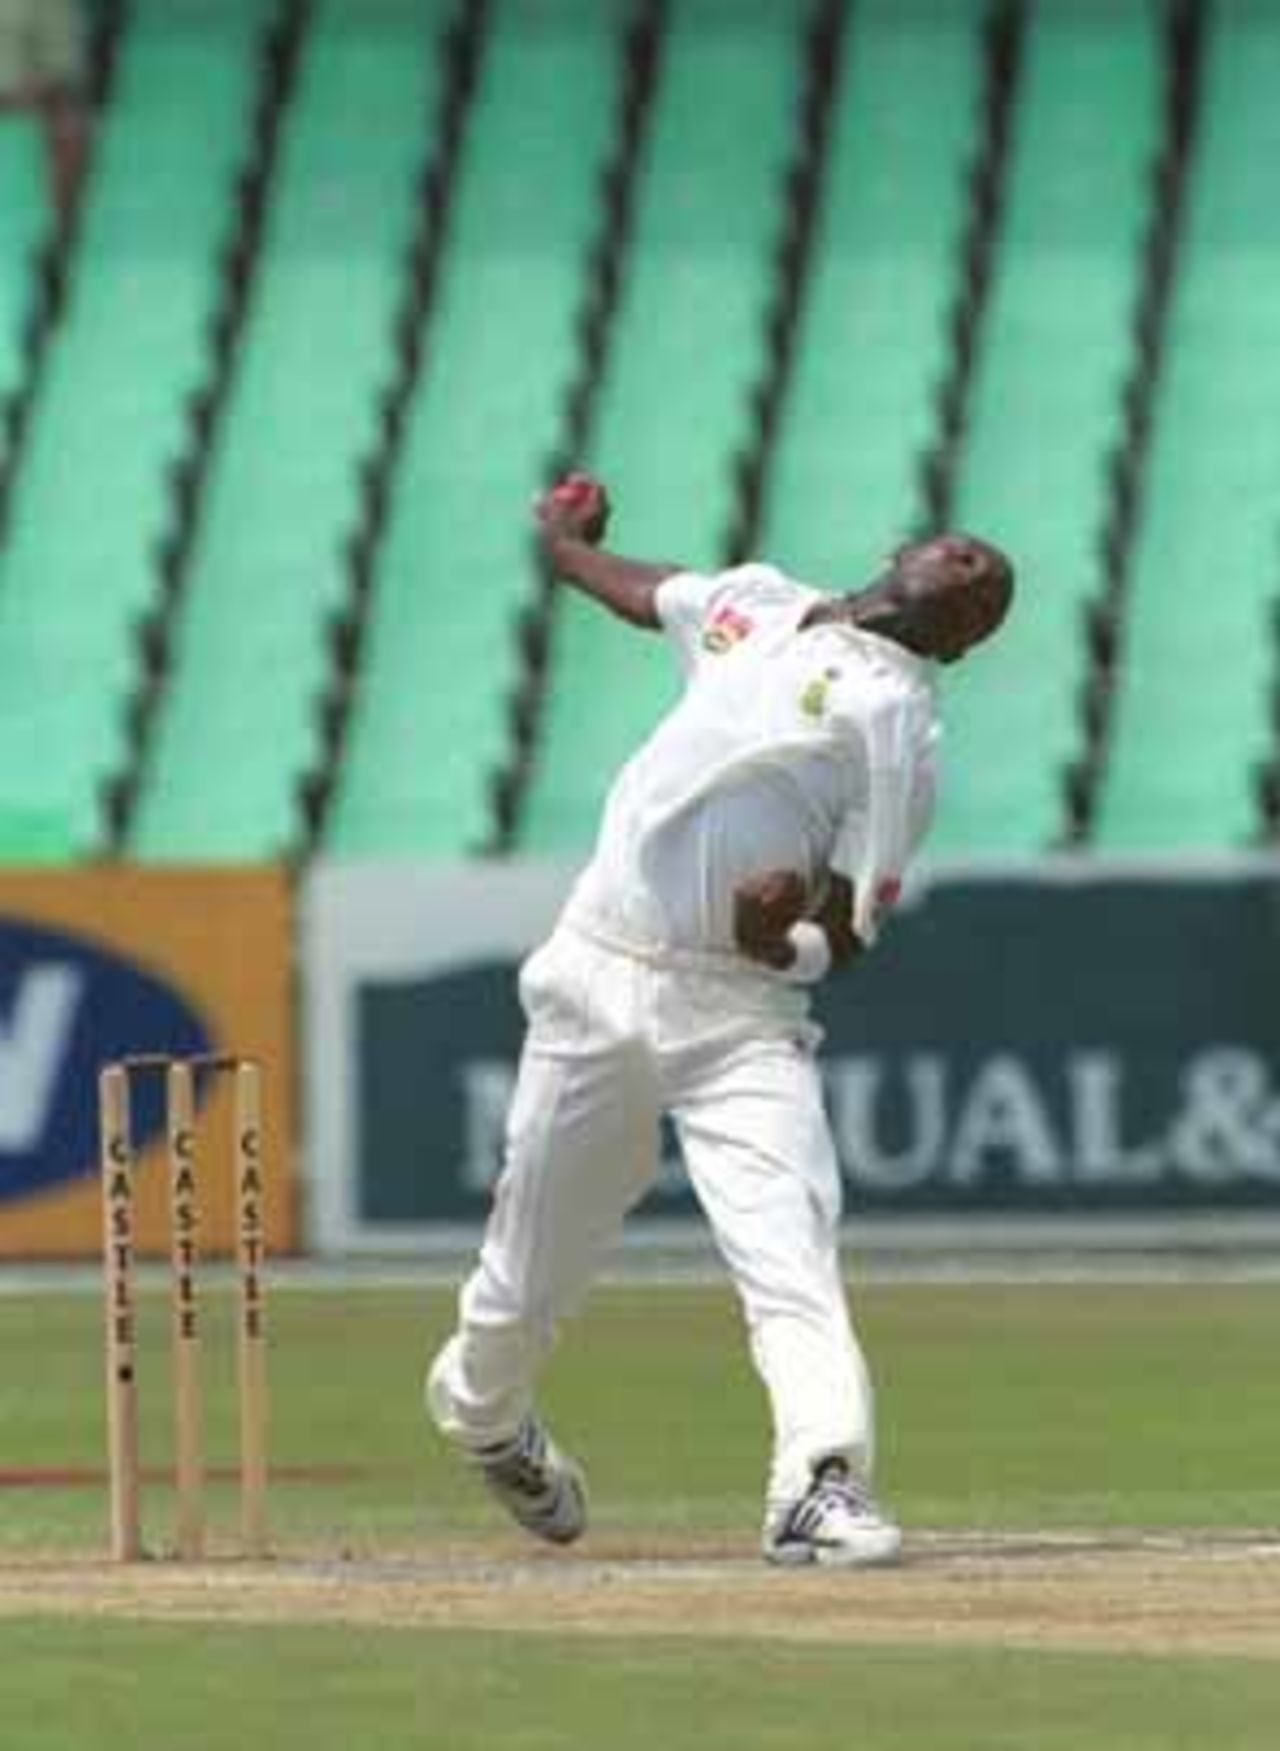 South Africa v Sri Lanka , 1st Test Match played at Durban, December 2000